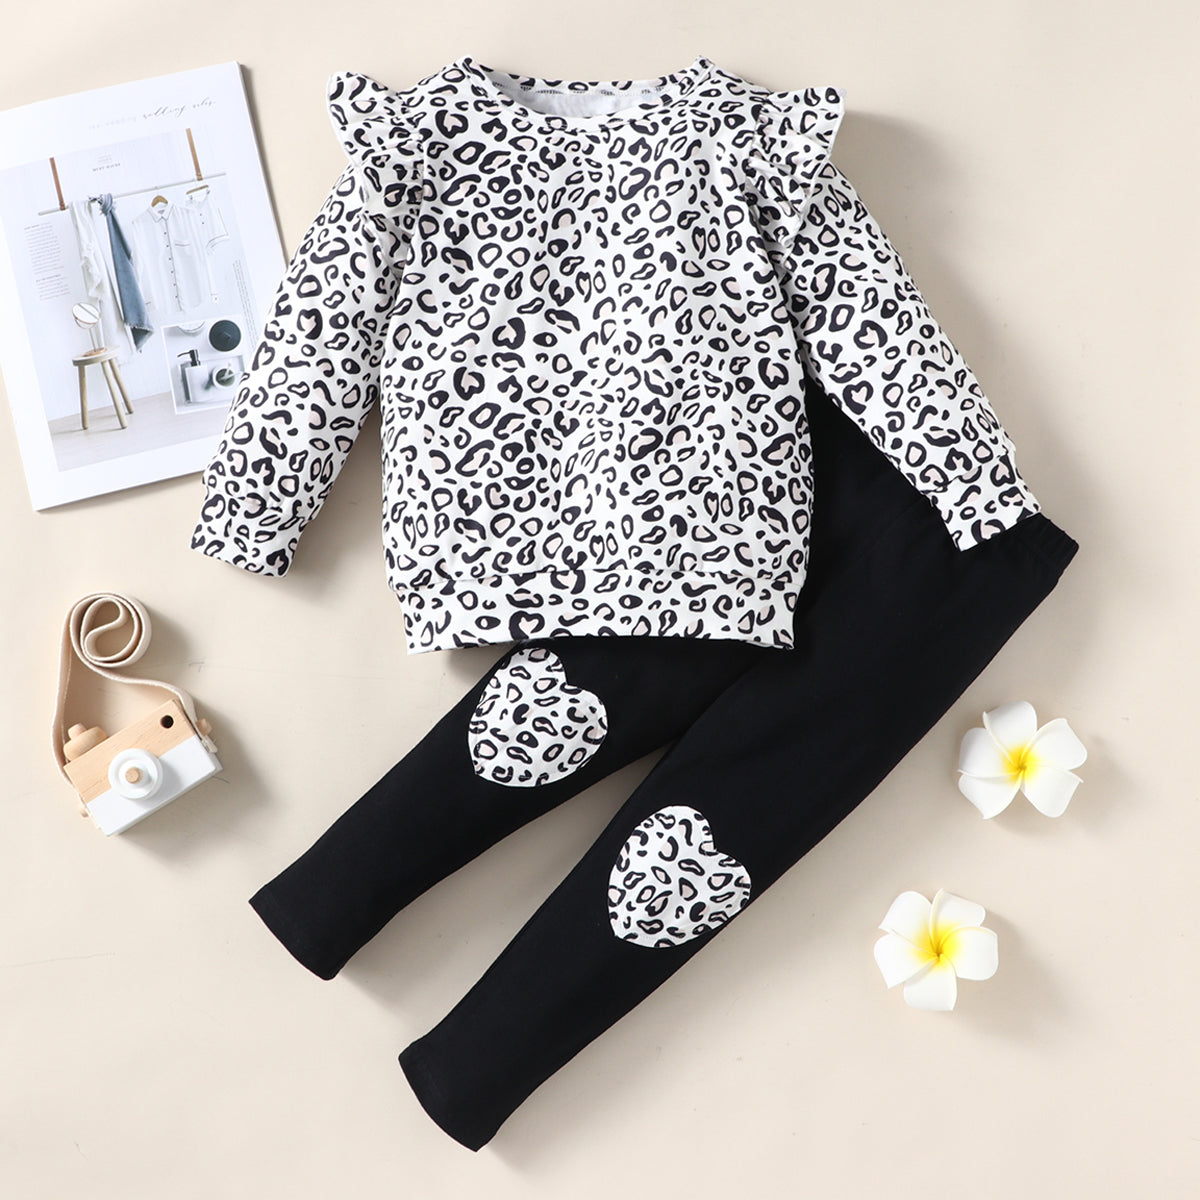 2-piece Toddler Girl Leopard Print Flutter Long-sleeve Top and Heart Pattern Pants Set